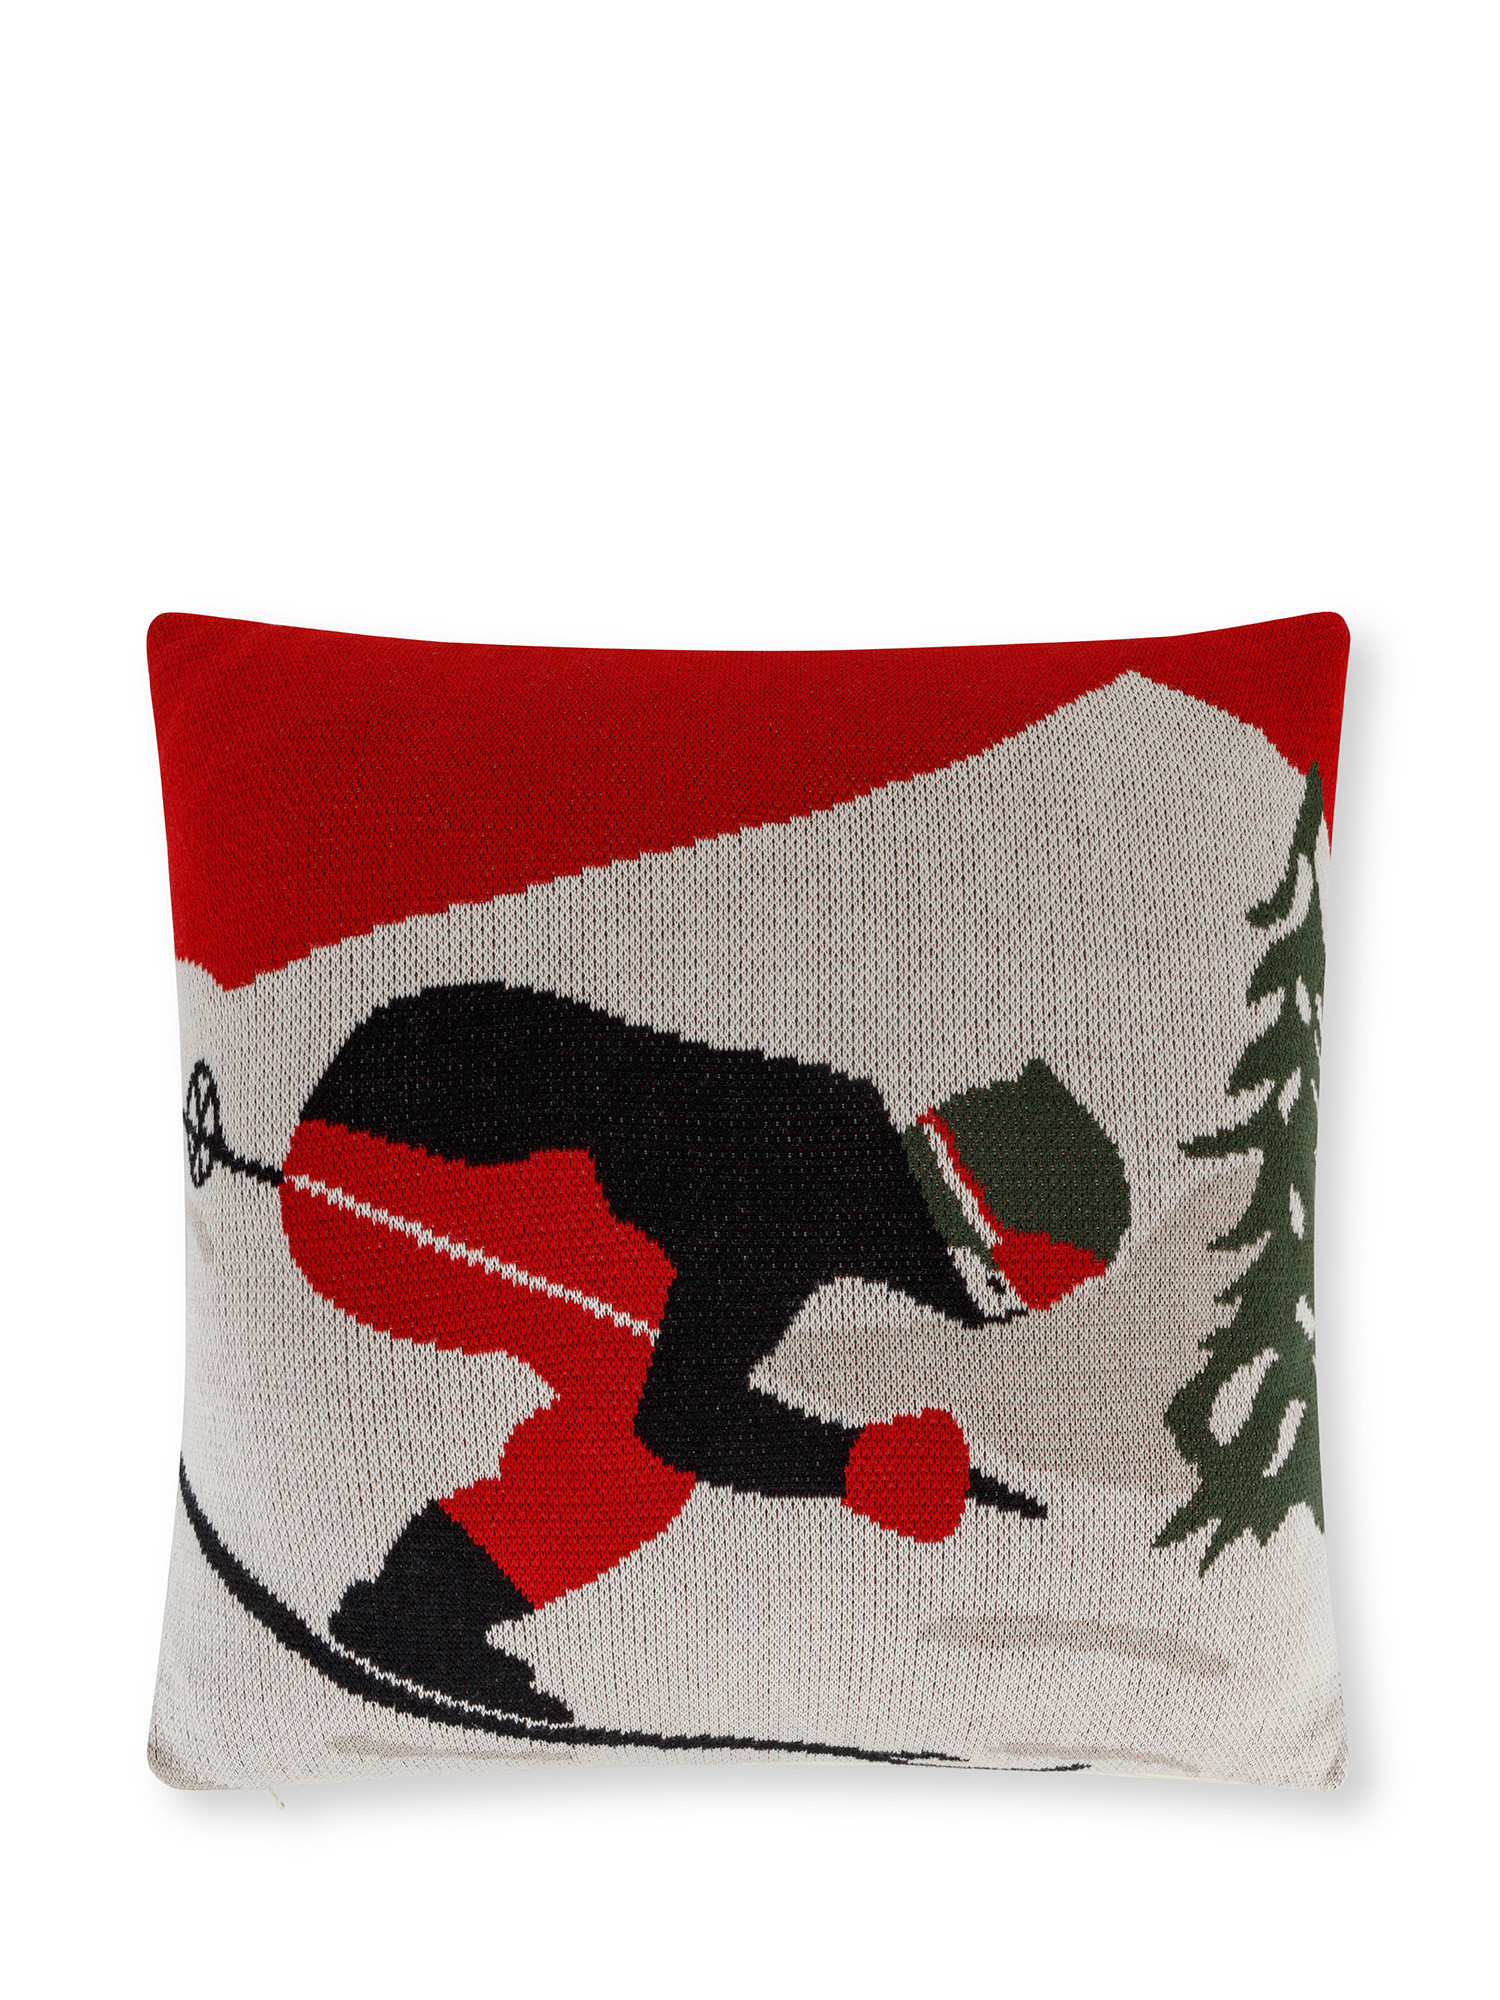 Cuscino in maglia jacquard motivo sciatore vintage 45x45 cm, Rosso, large image number 0